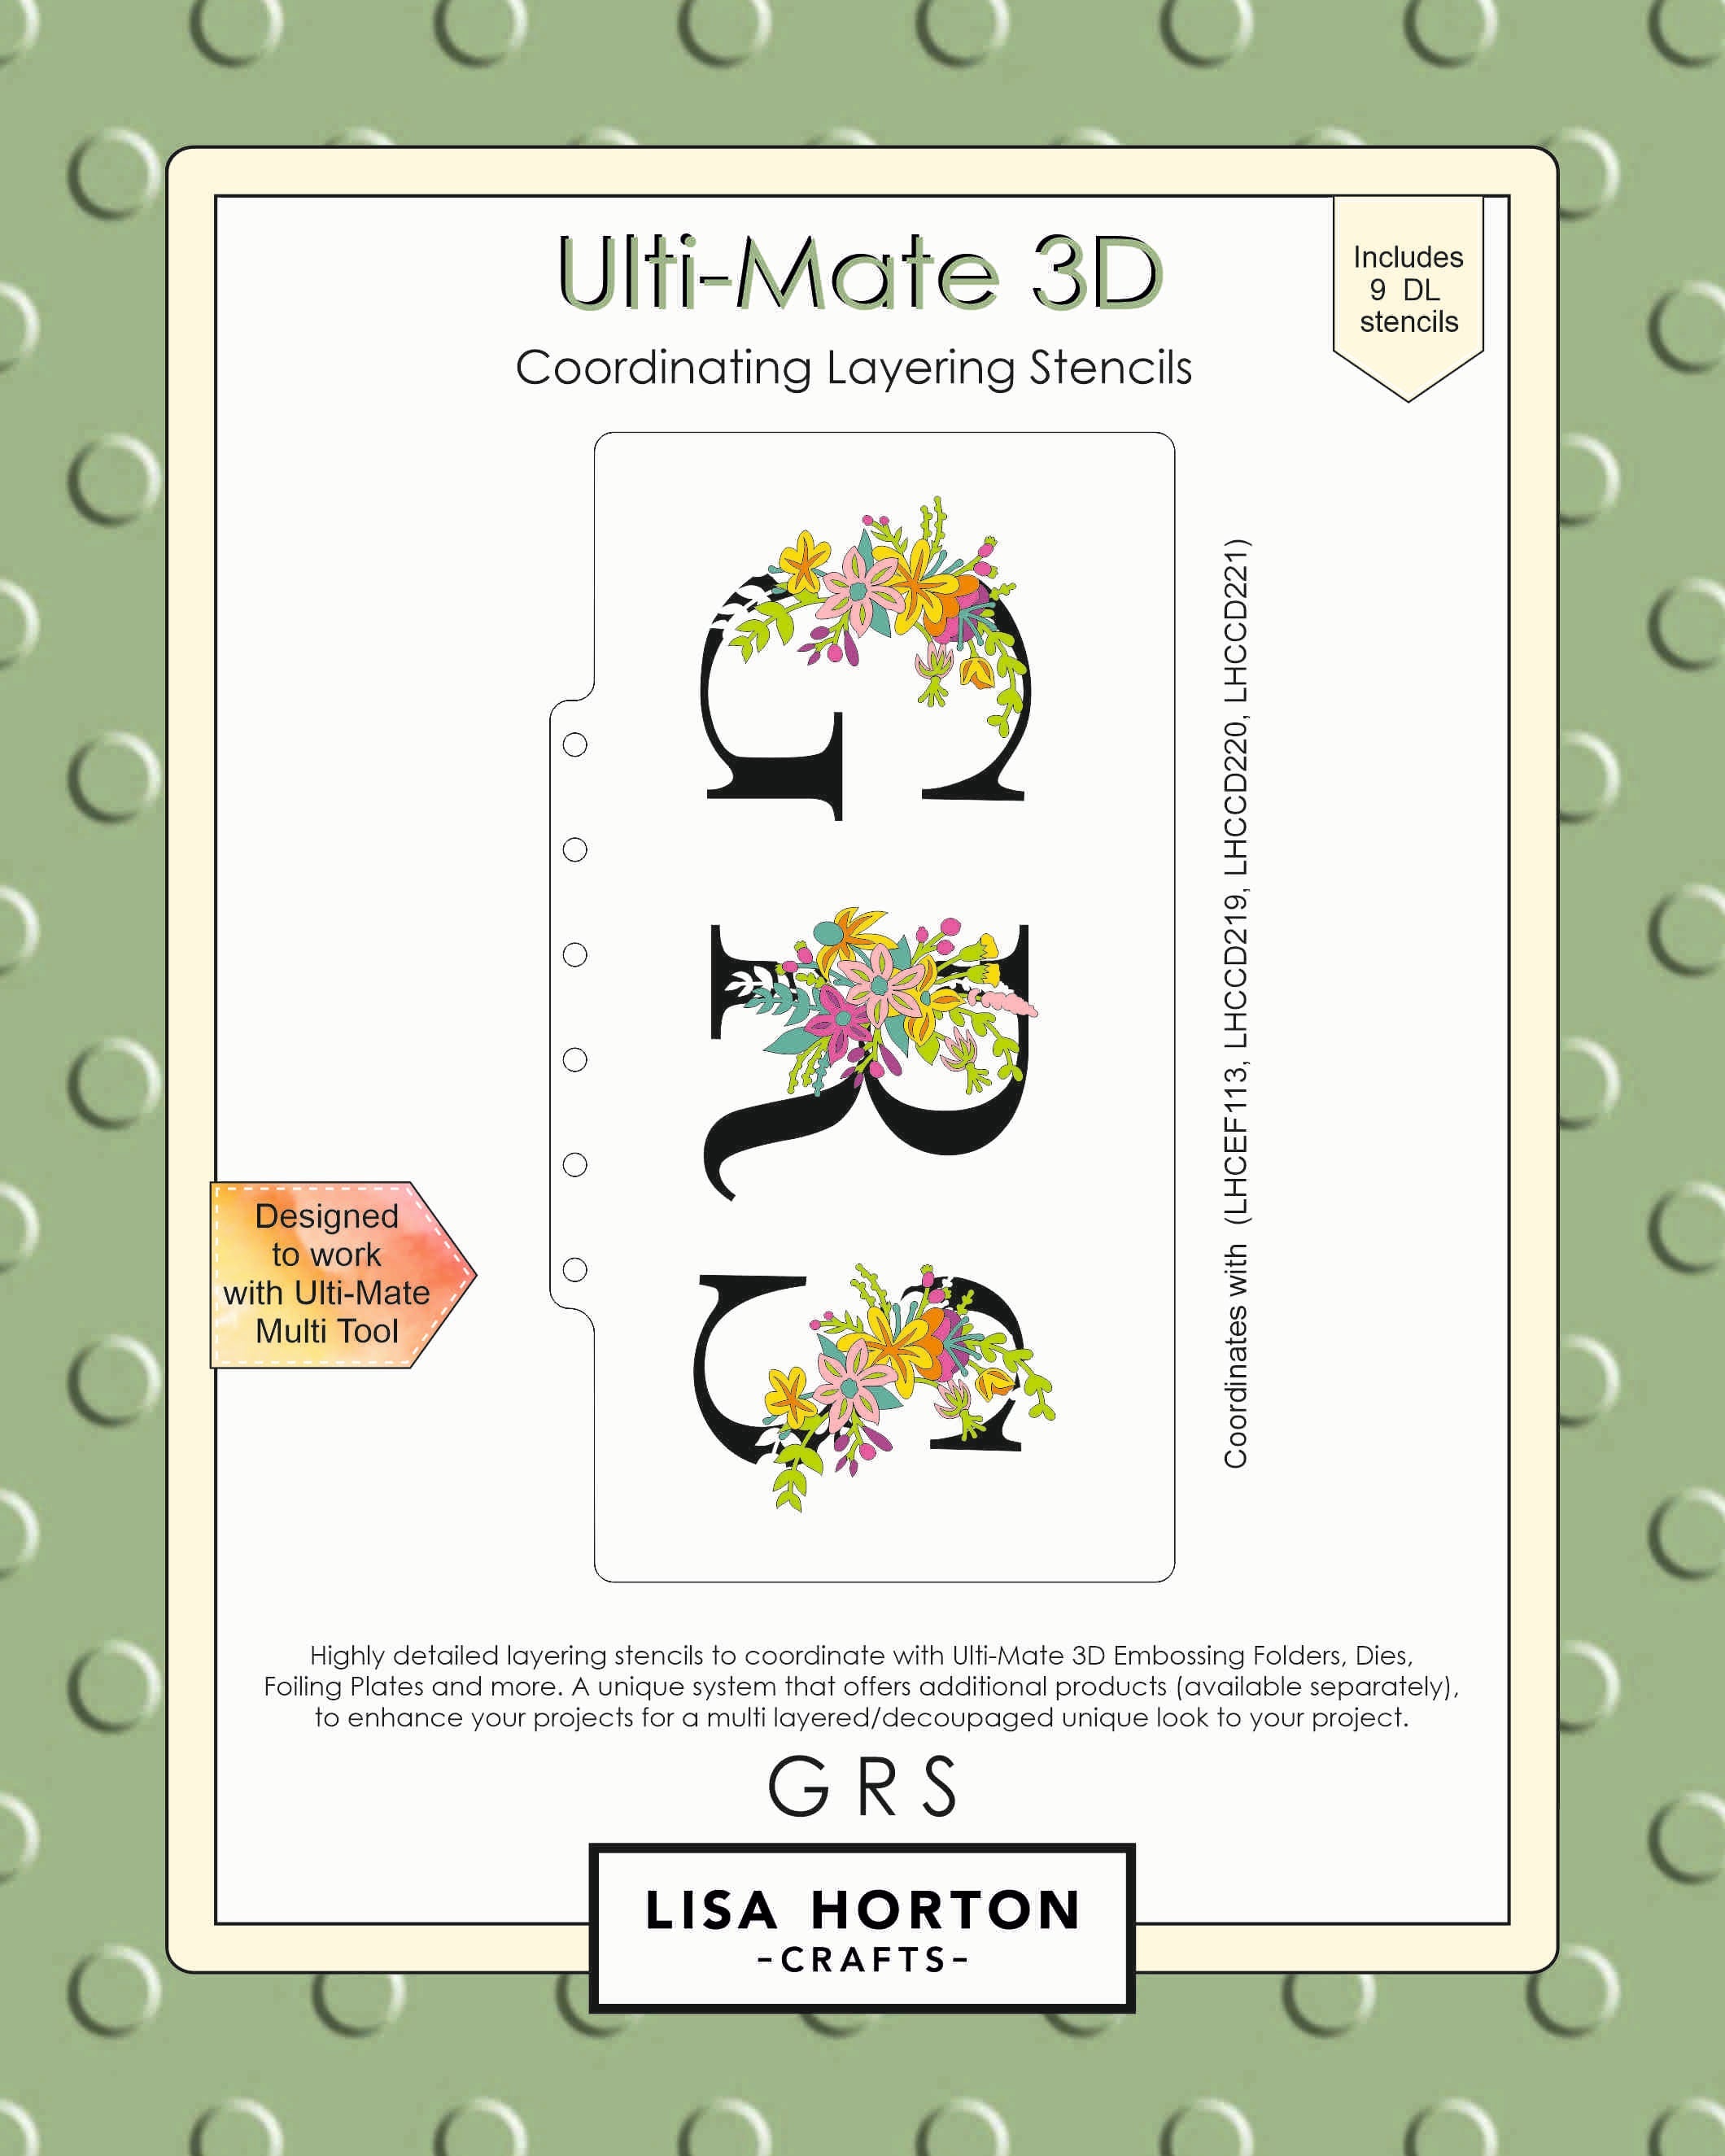 Lisa Horton Crafts Ulti-Mate 3D Slimline Layering Stencils GRS